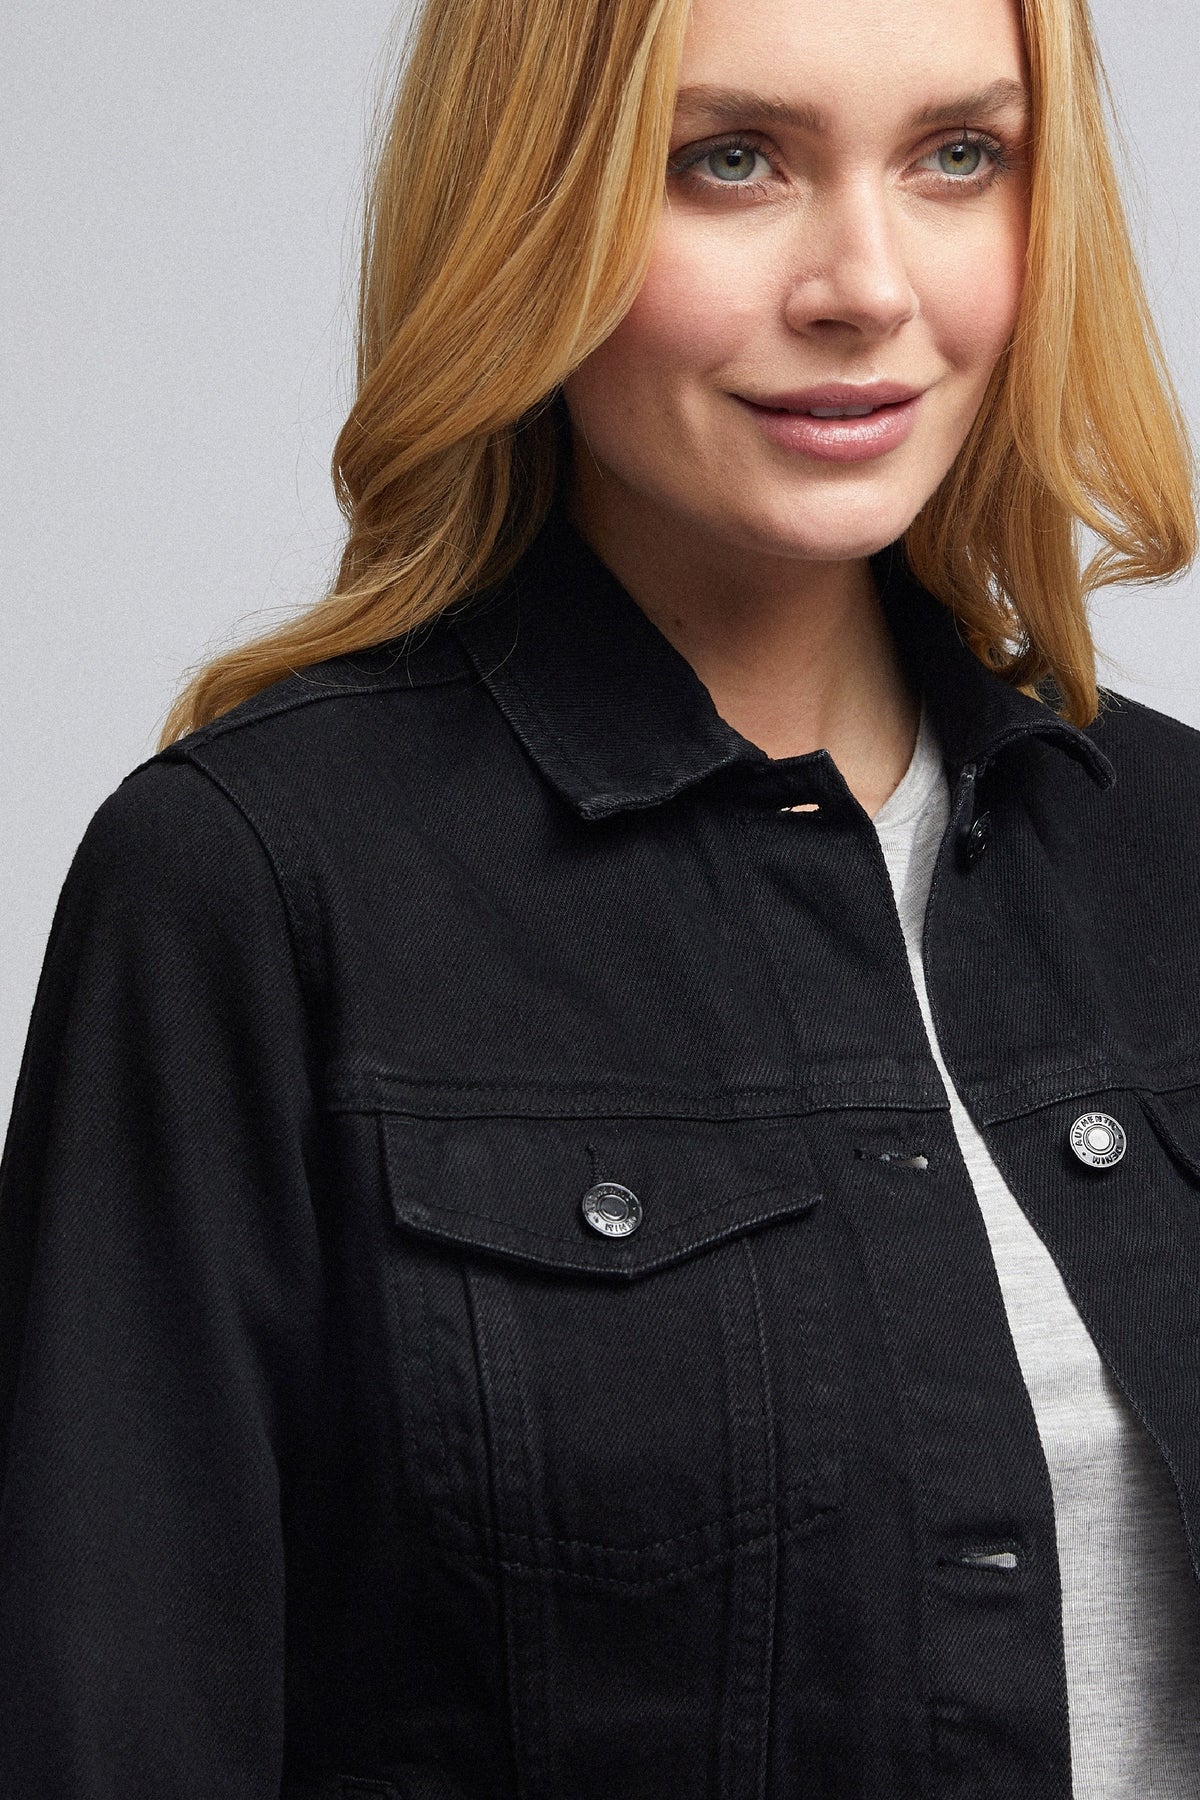 Stylish woman's black denim jacket with front pockets against plain background.